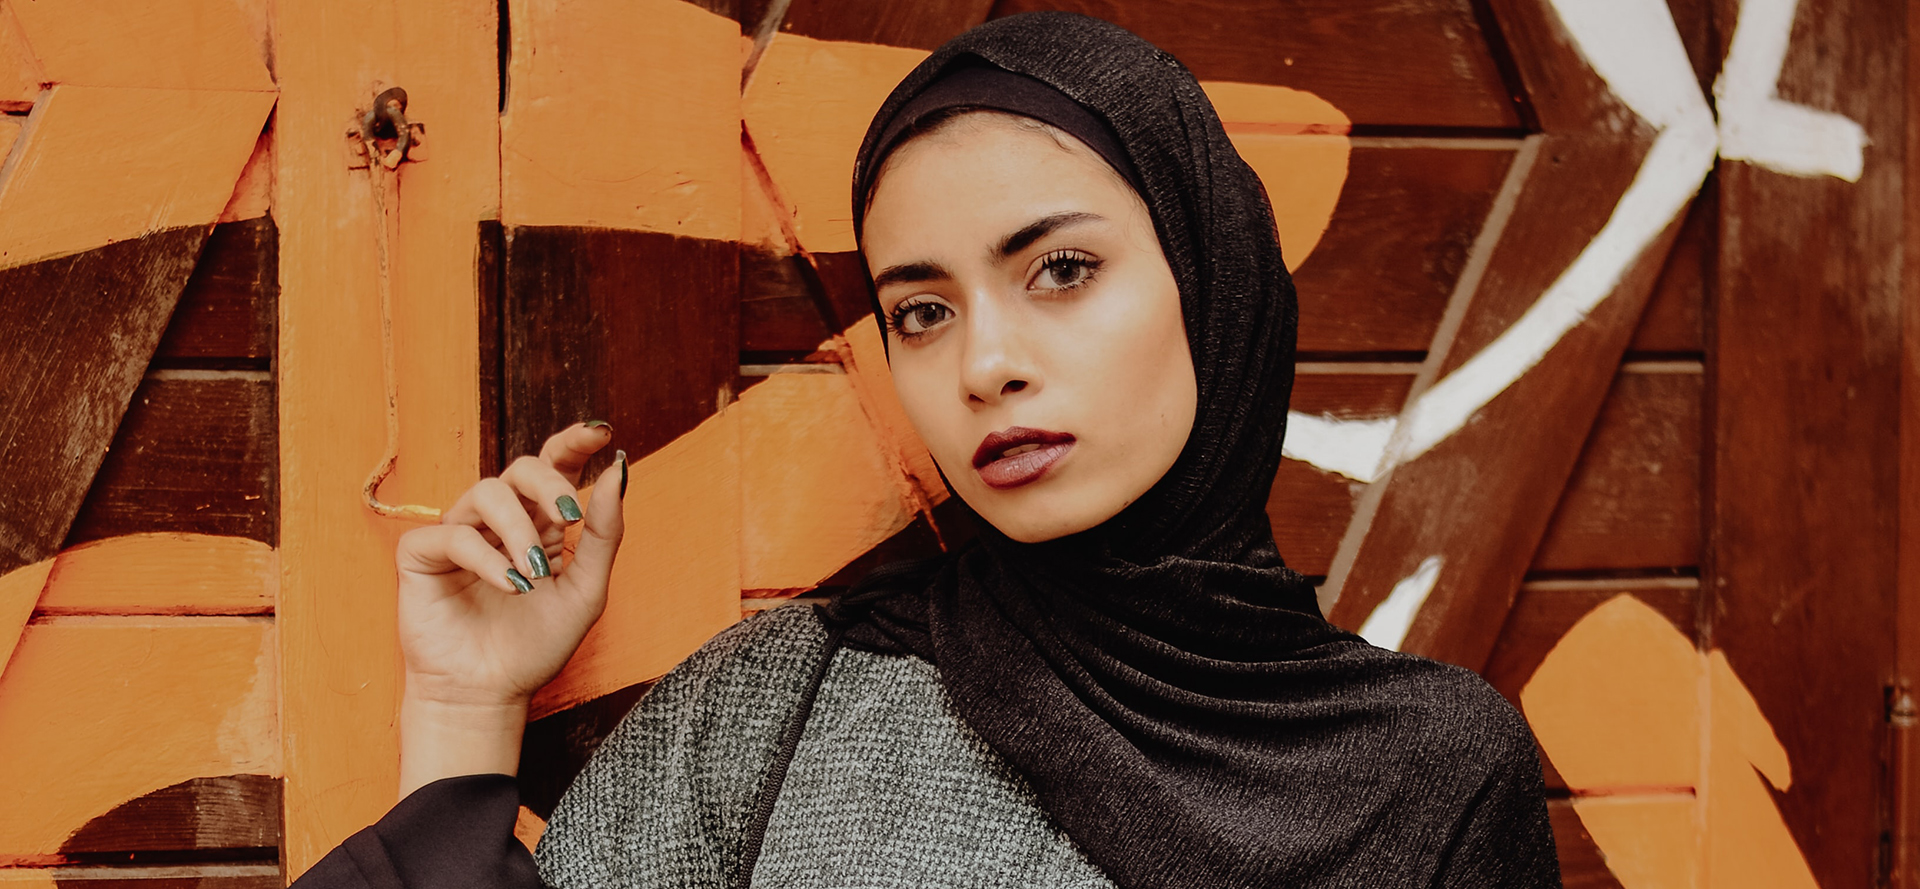 Mujer árabe con pañuelo negro en la cabeza.